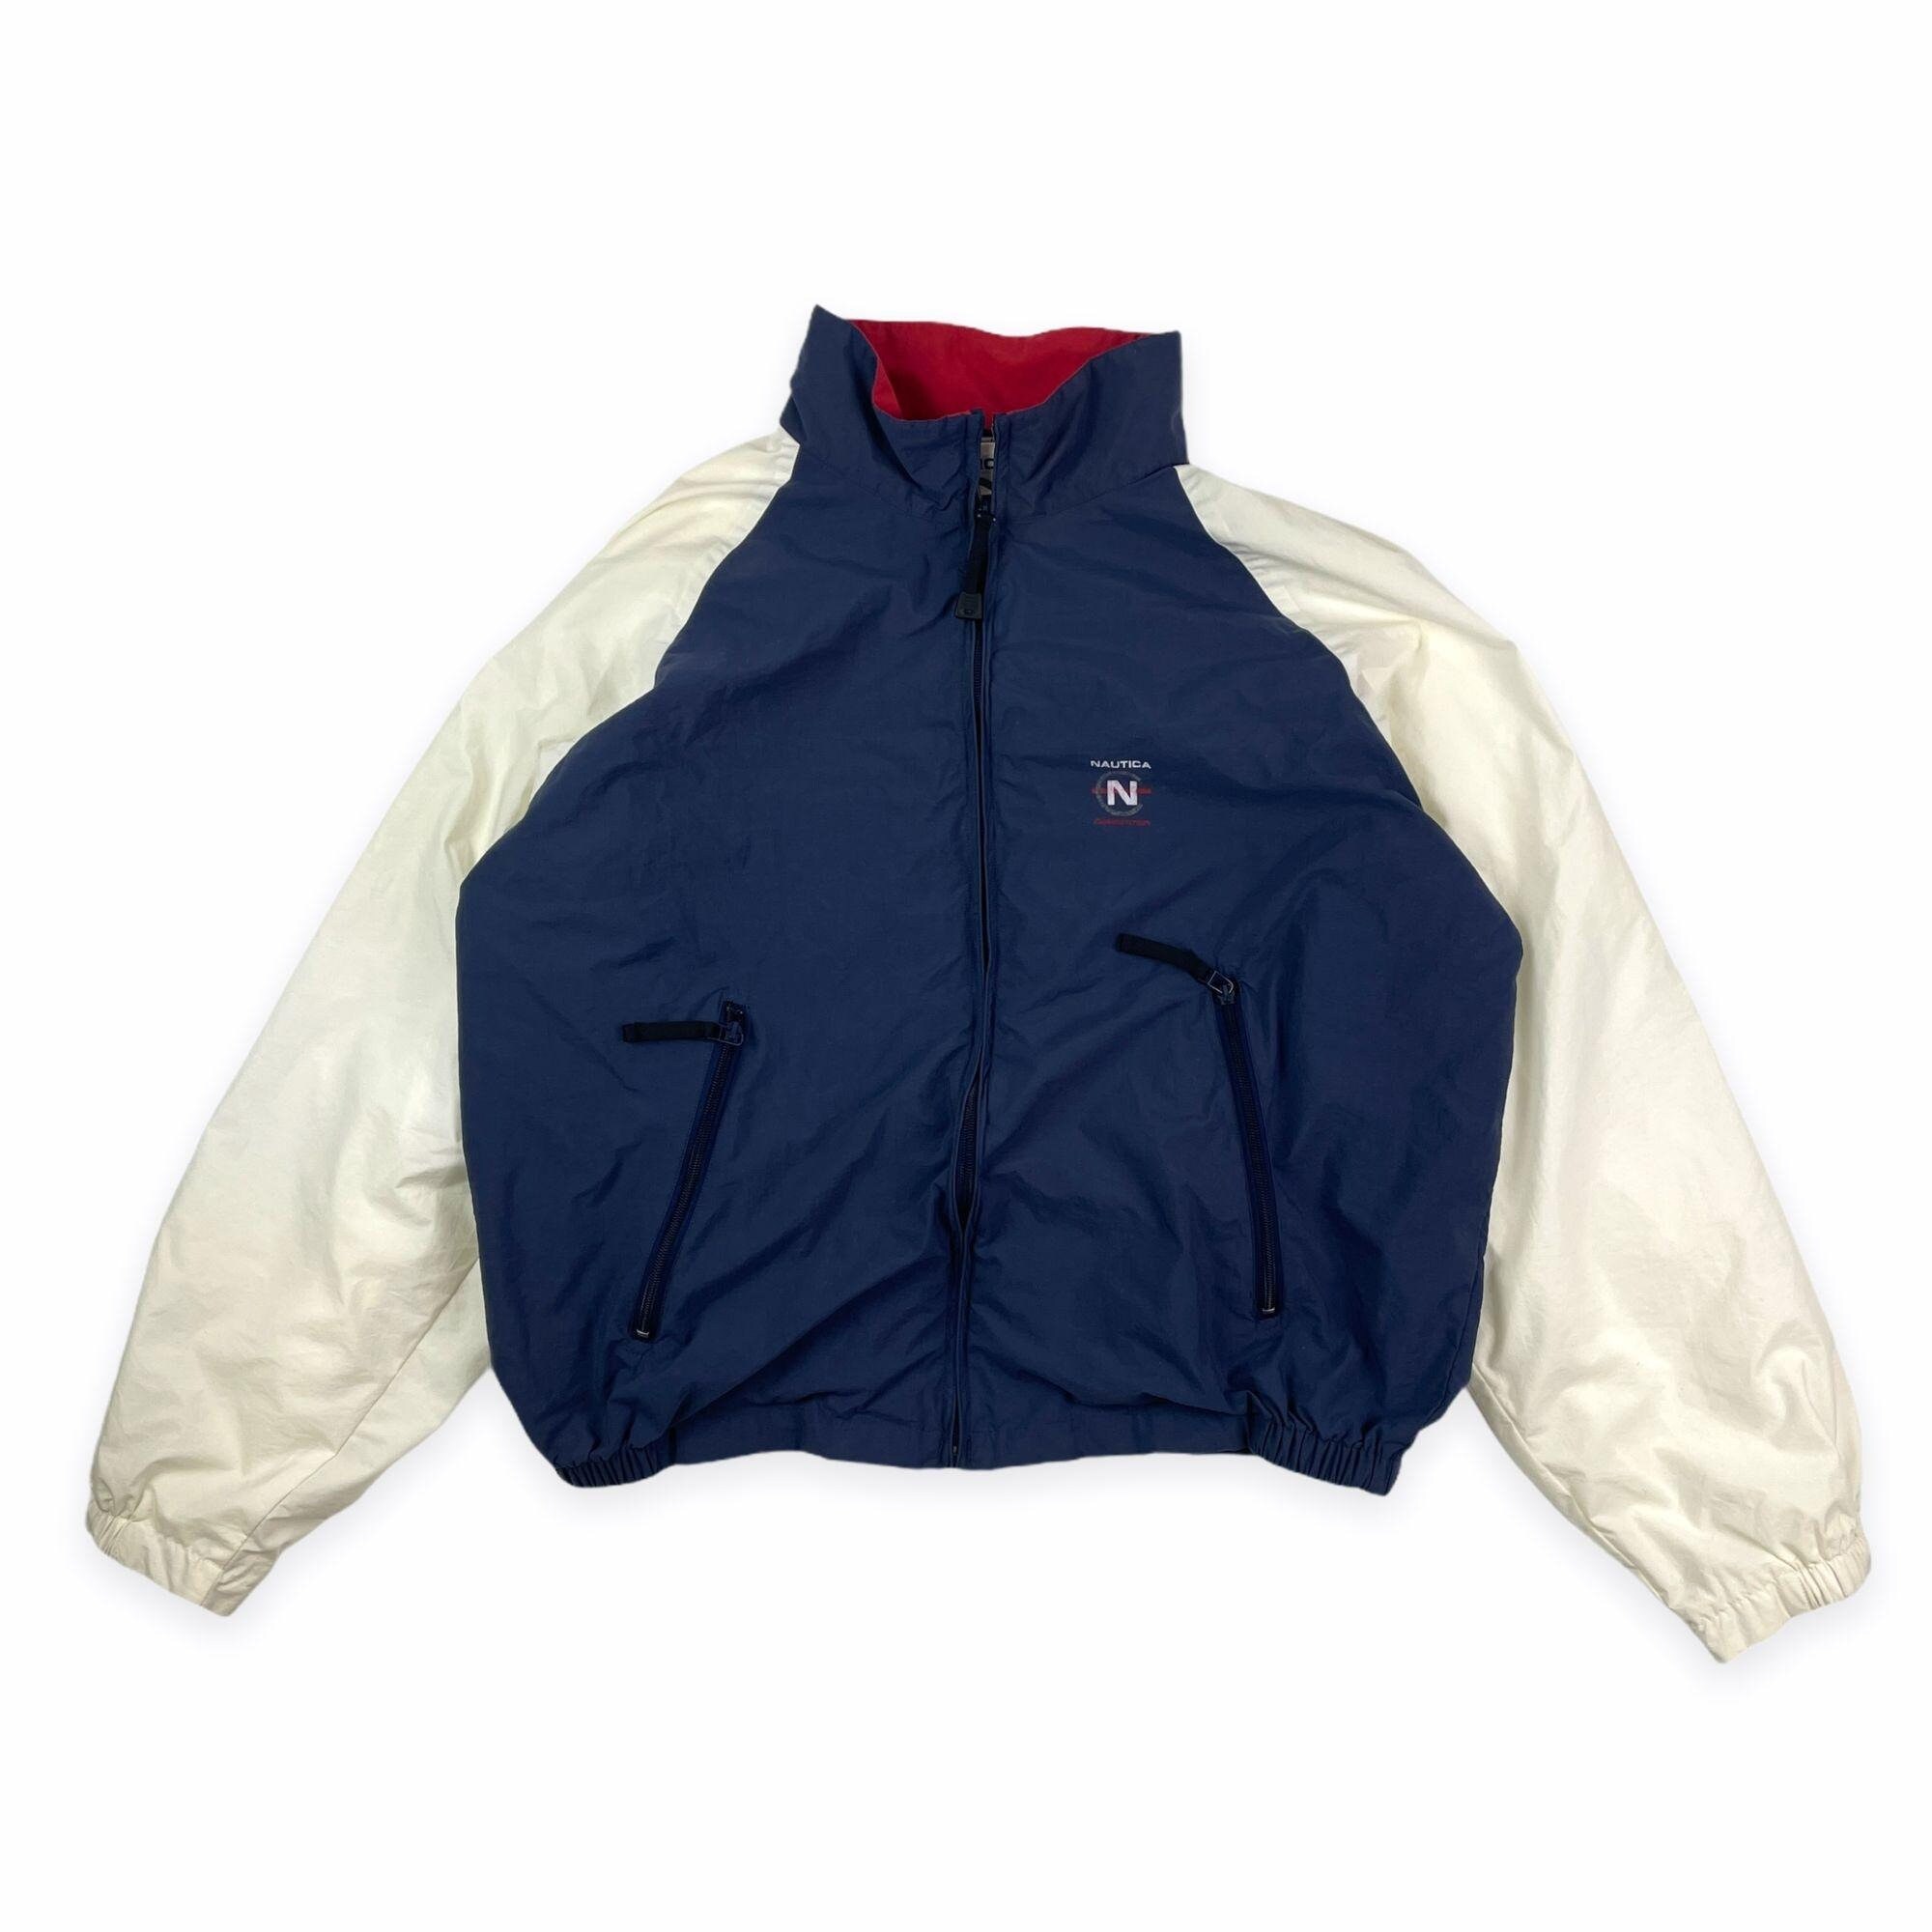 Vintage 90s Nautica Competition Windbreaker Jacket | Etsy